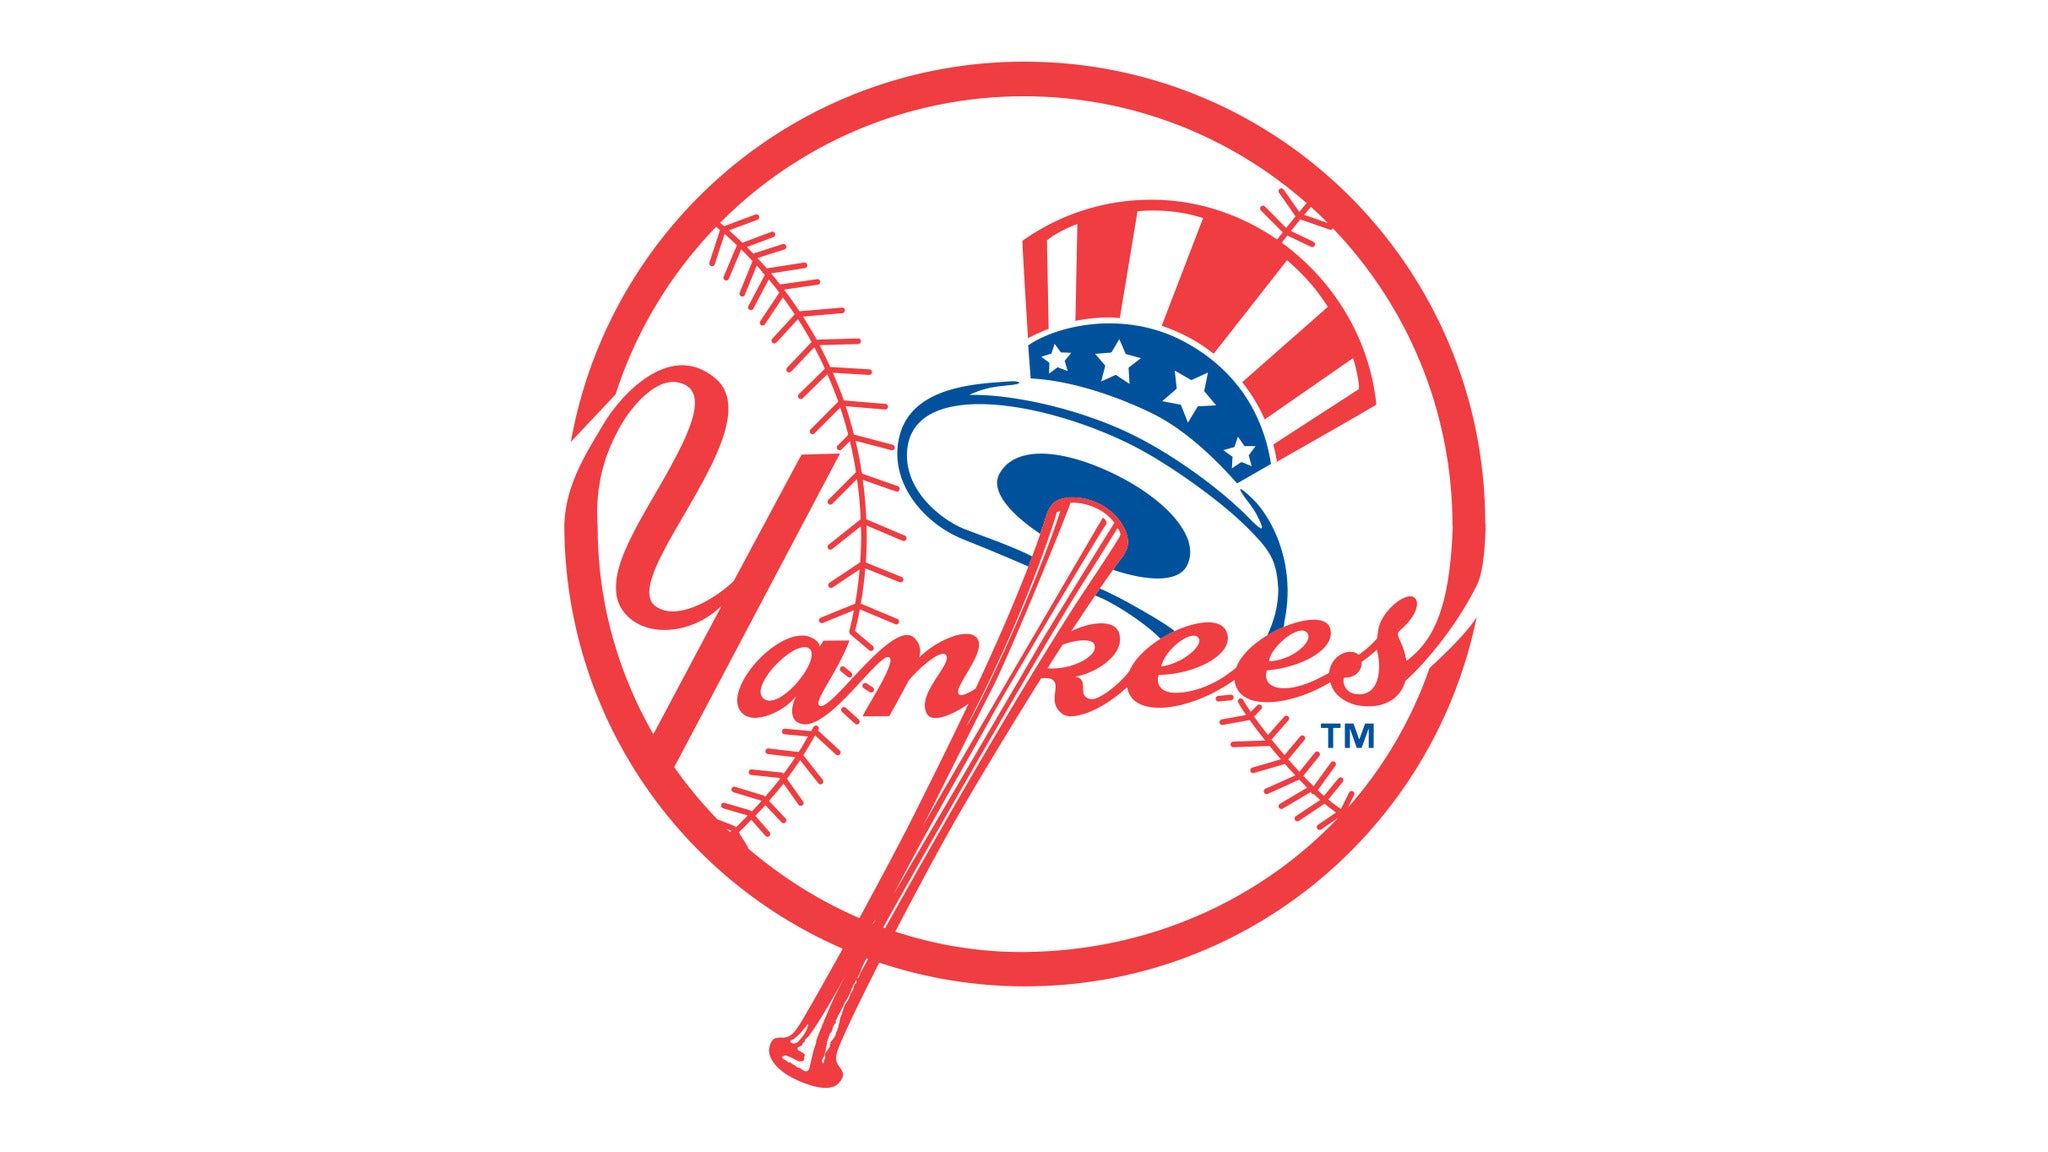 New York Yankees v. Tampa Bay Rays